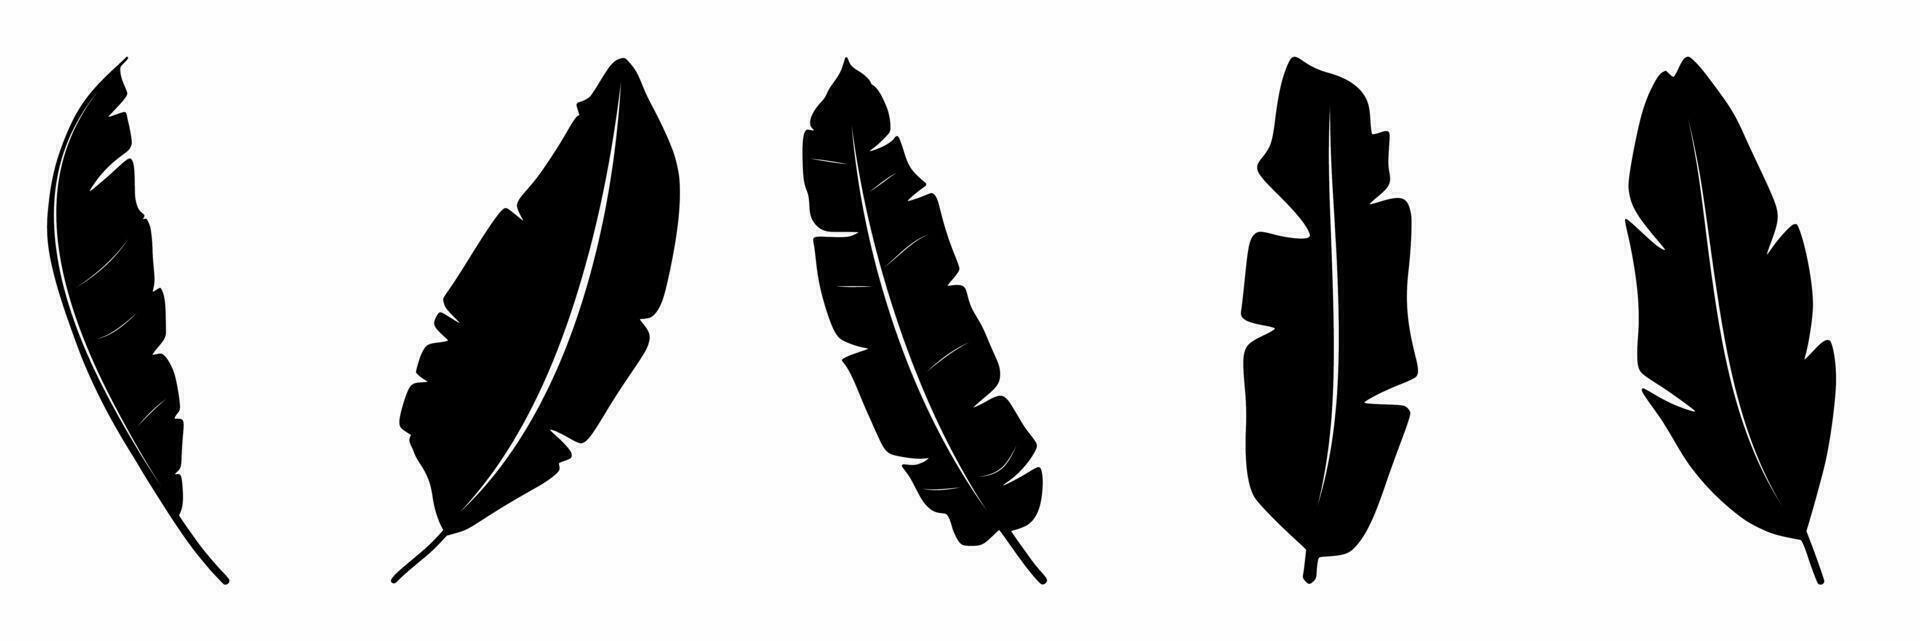 Icon design. Banana leaf icon illustration collection. vector